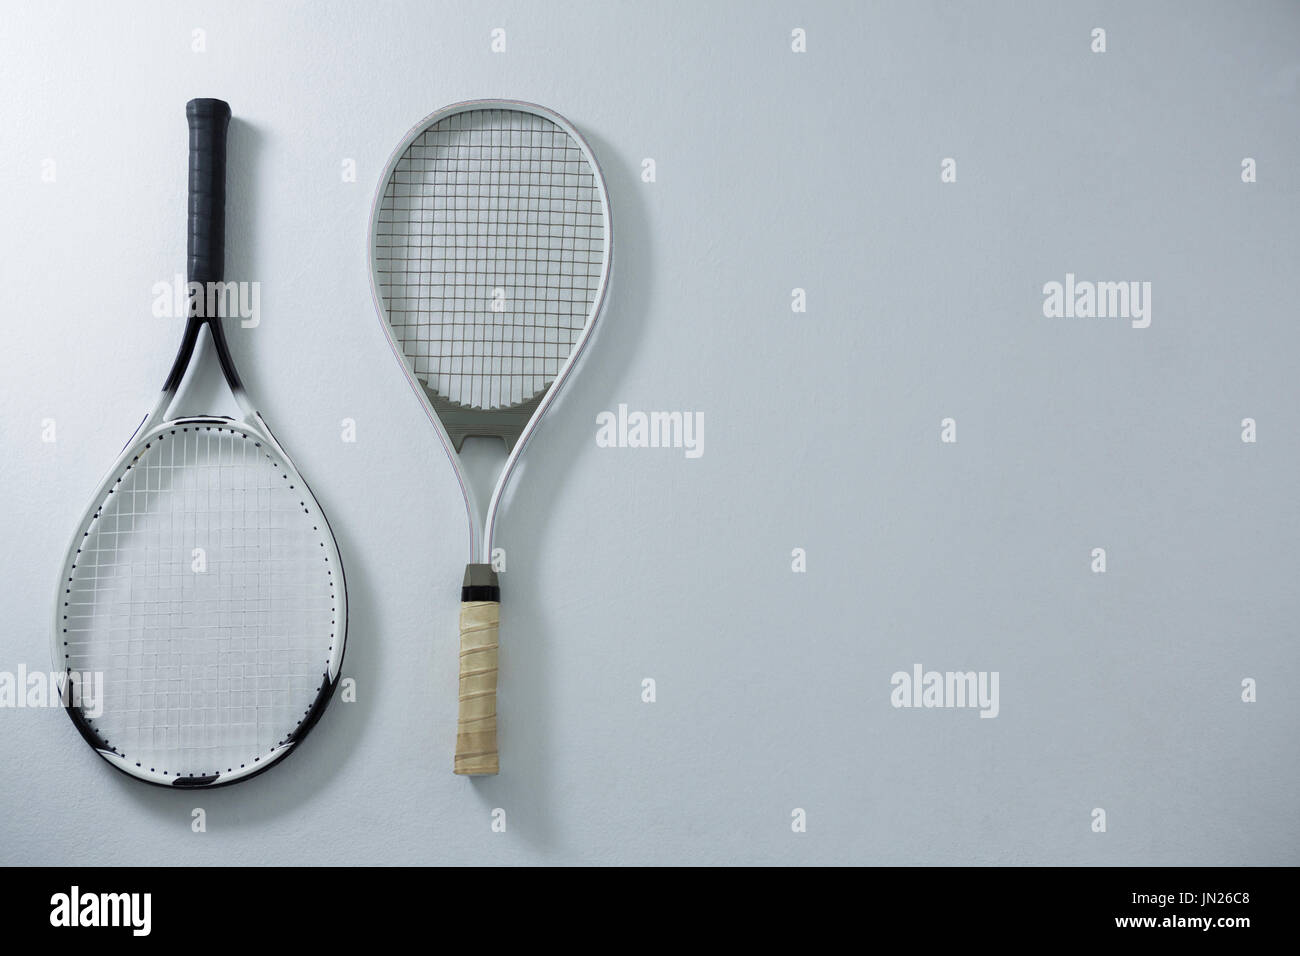 Overhead view of metallic tennis rackets on white background Stock Photo